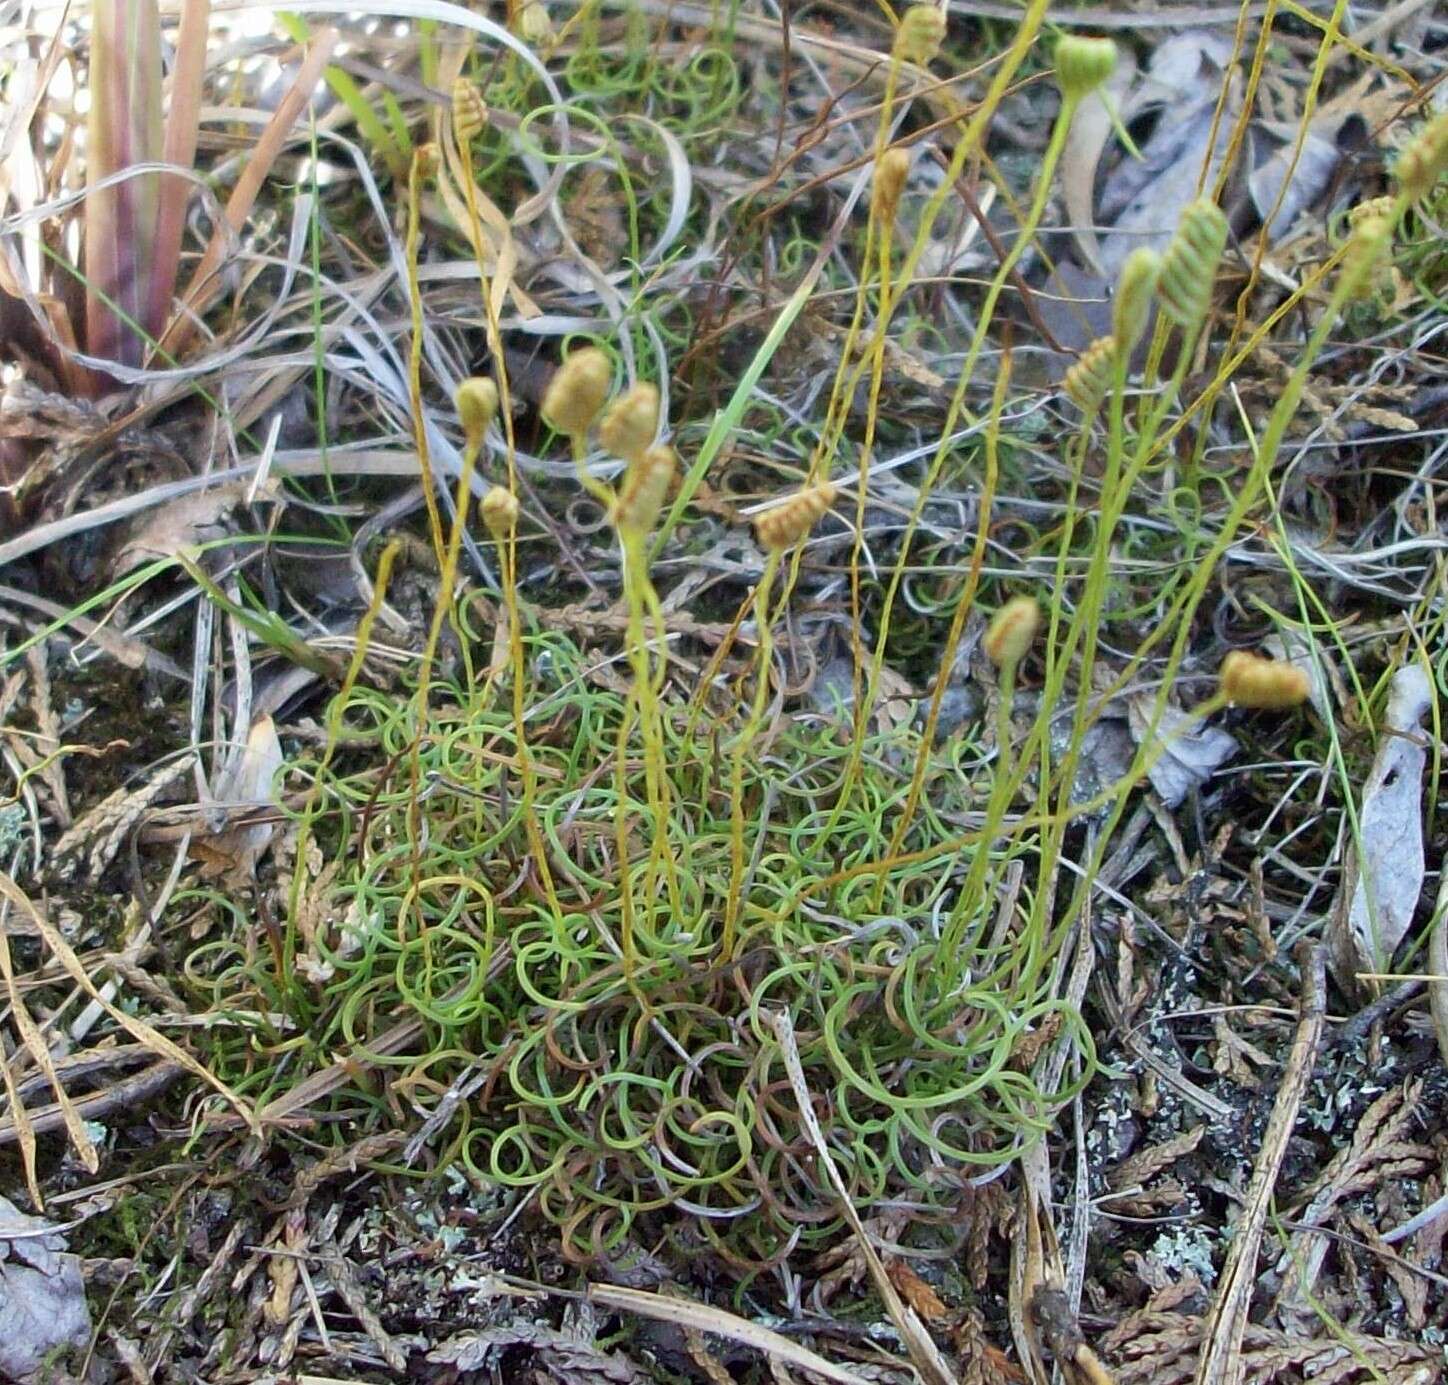 Image of little curlygrass fern